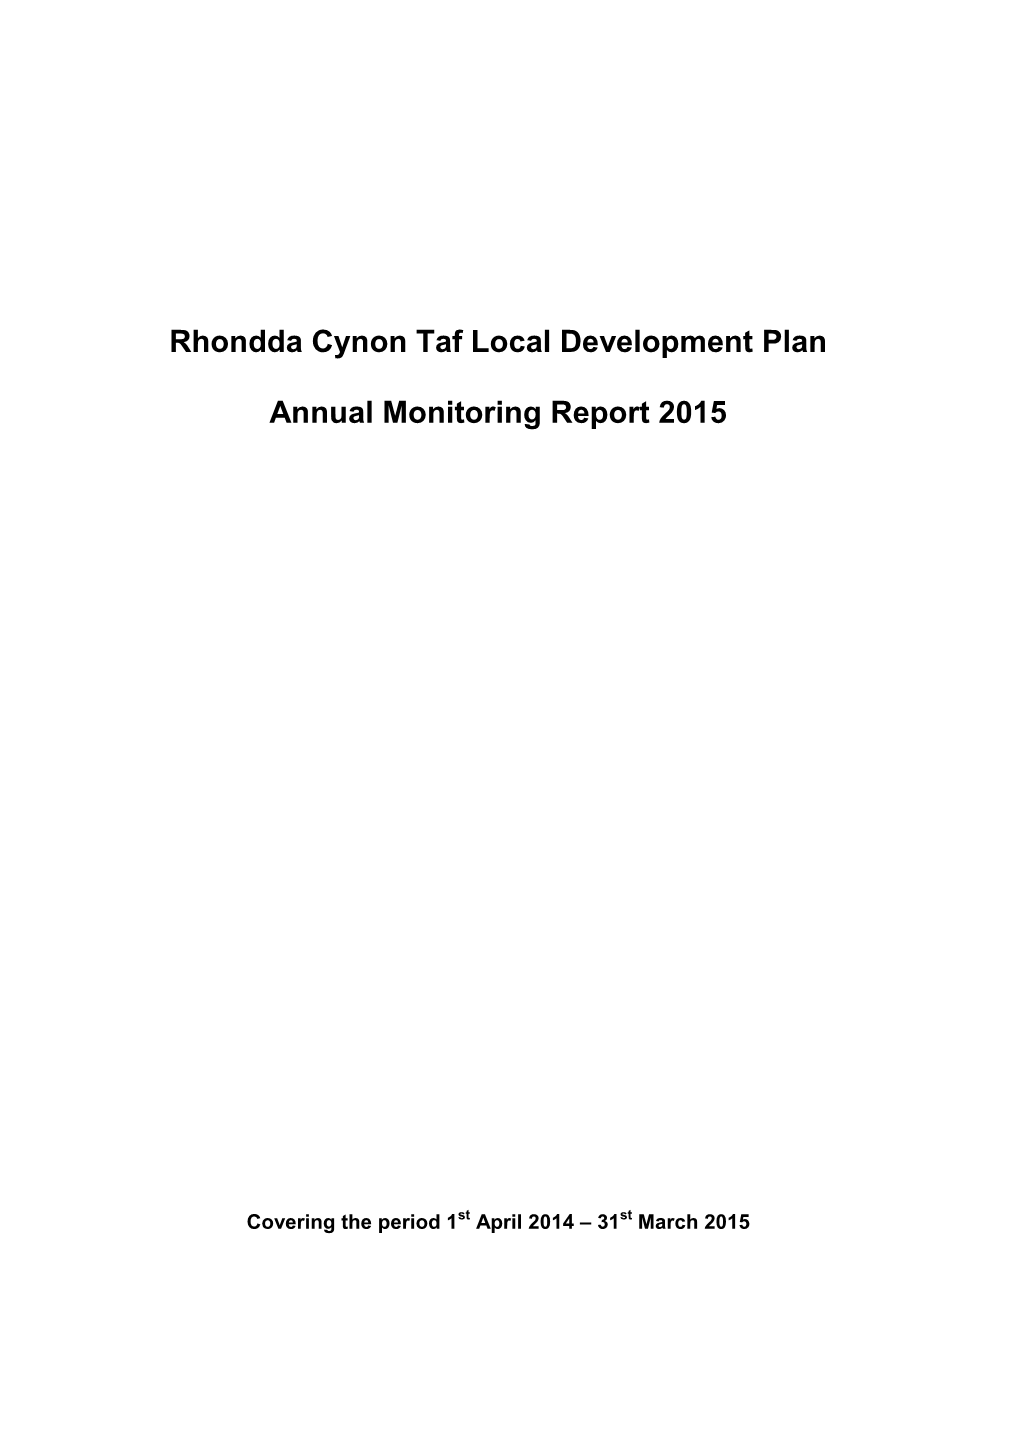 Rhondda Cynon Taf Local Development Plan Annual